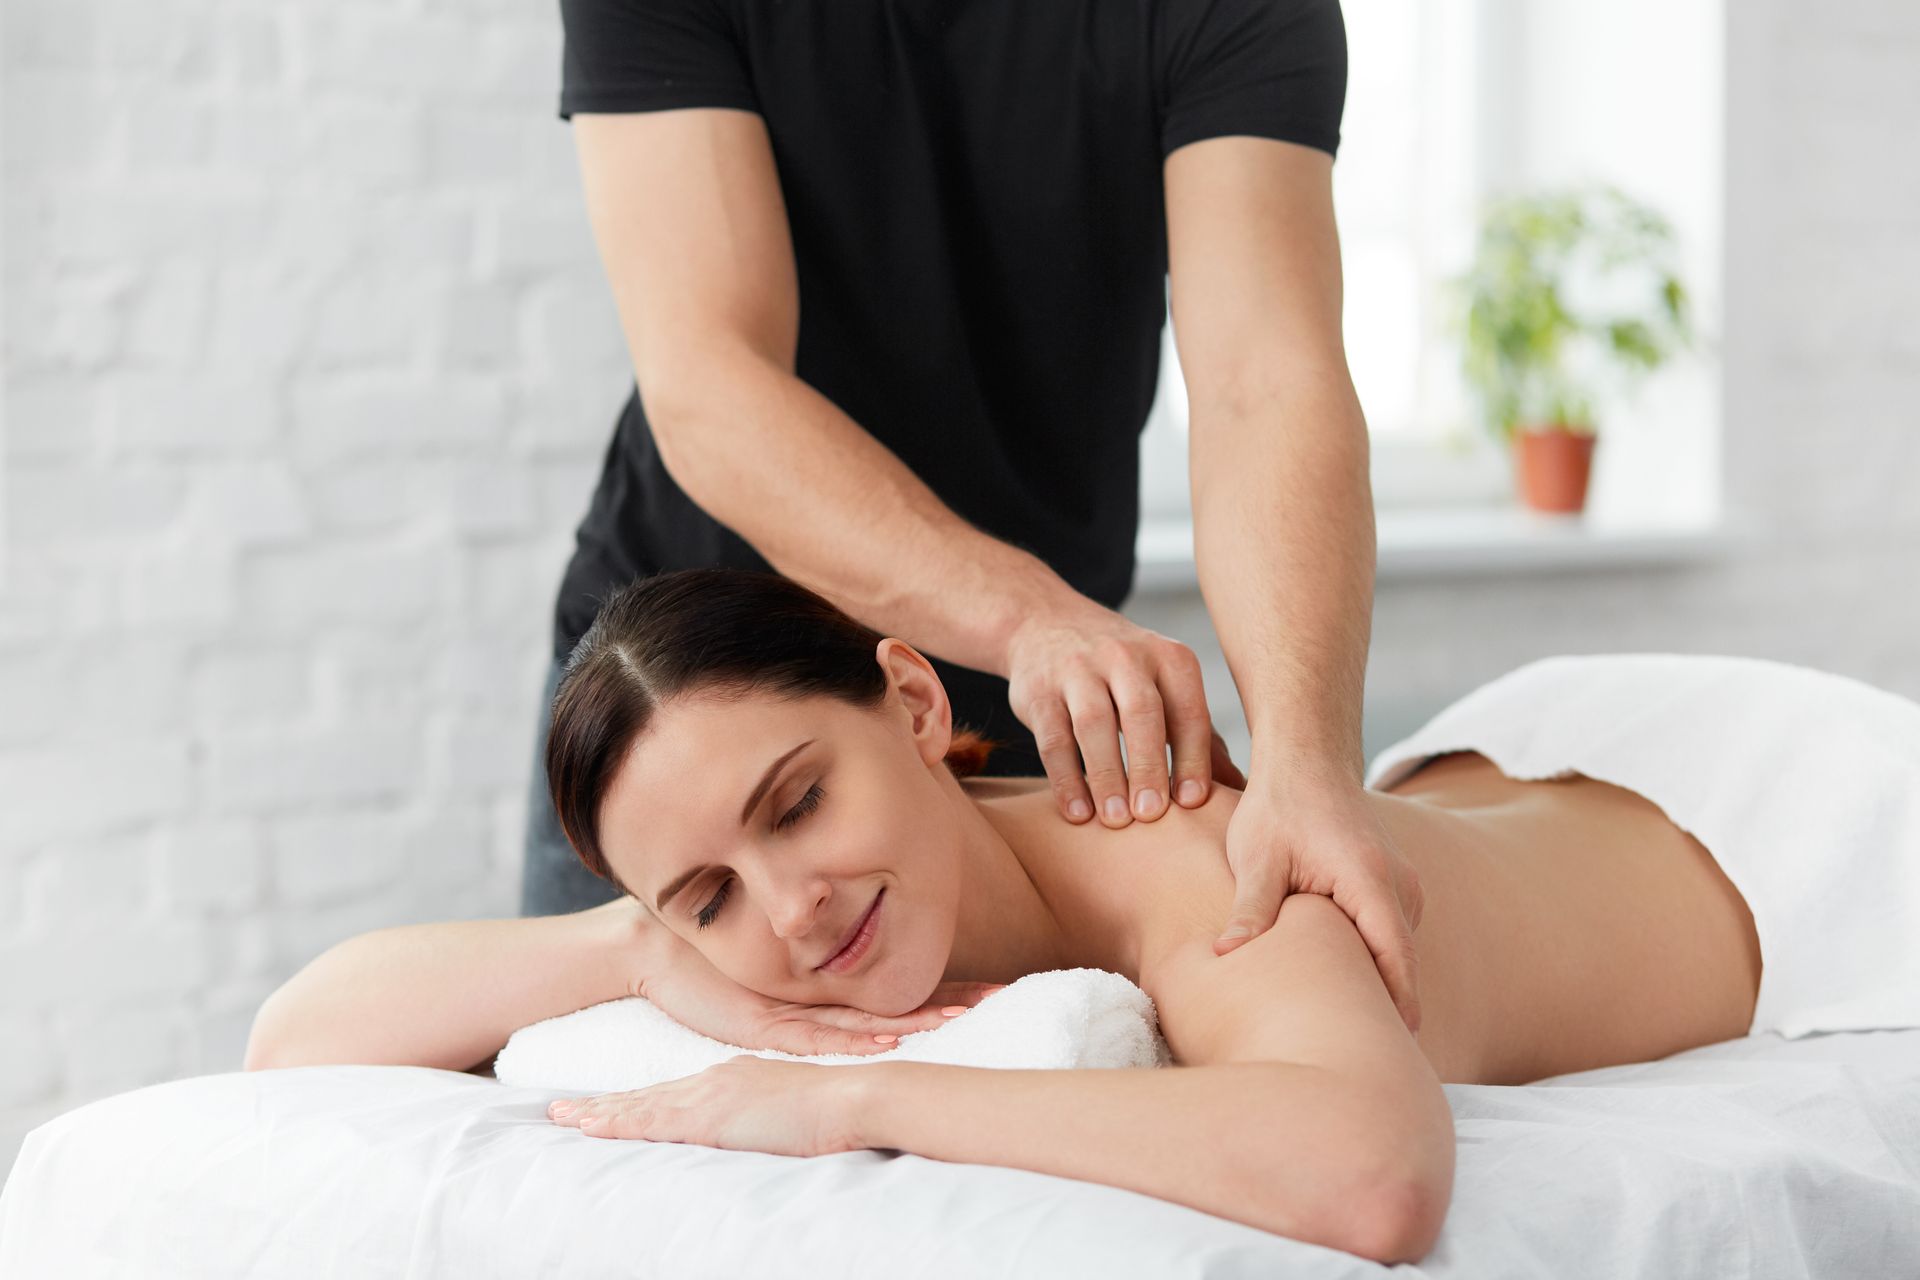 A lady enjoying a relaxing massage